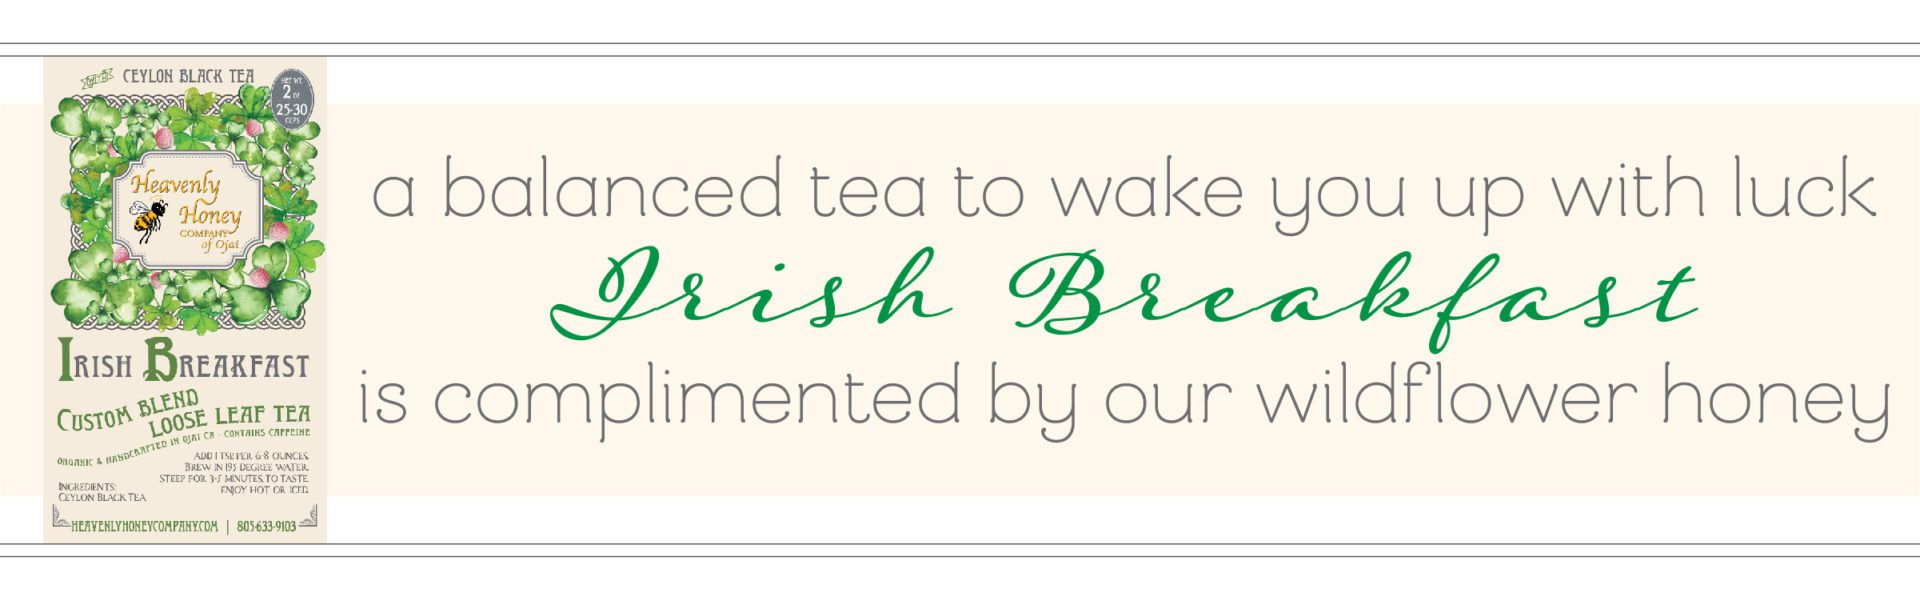 Irish Breakfast Custom Blend Tea